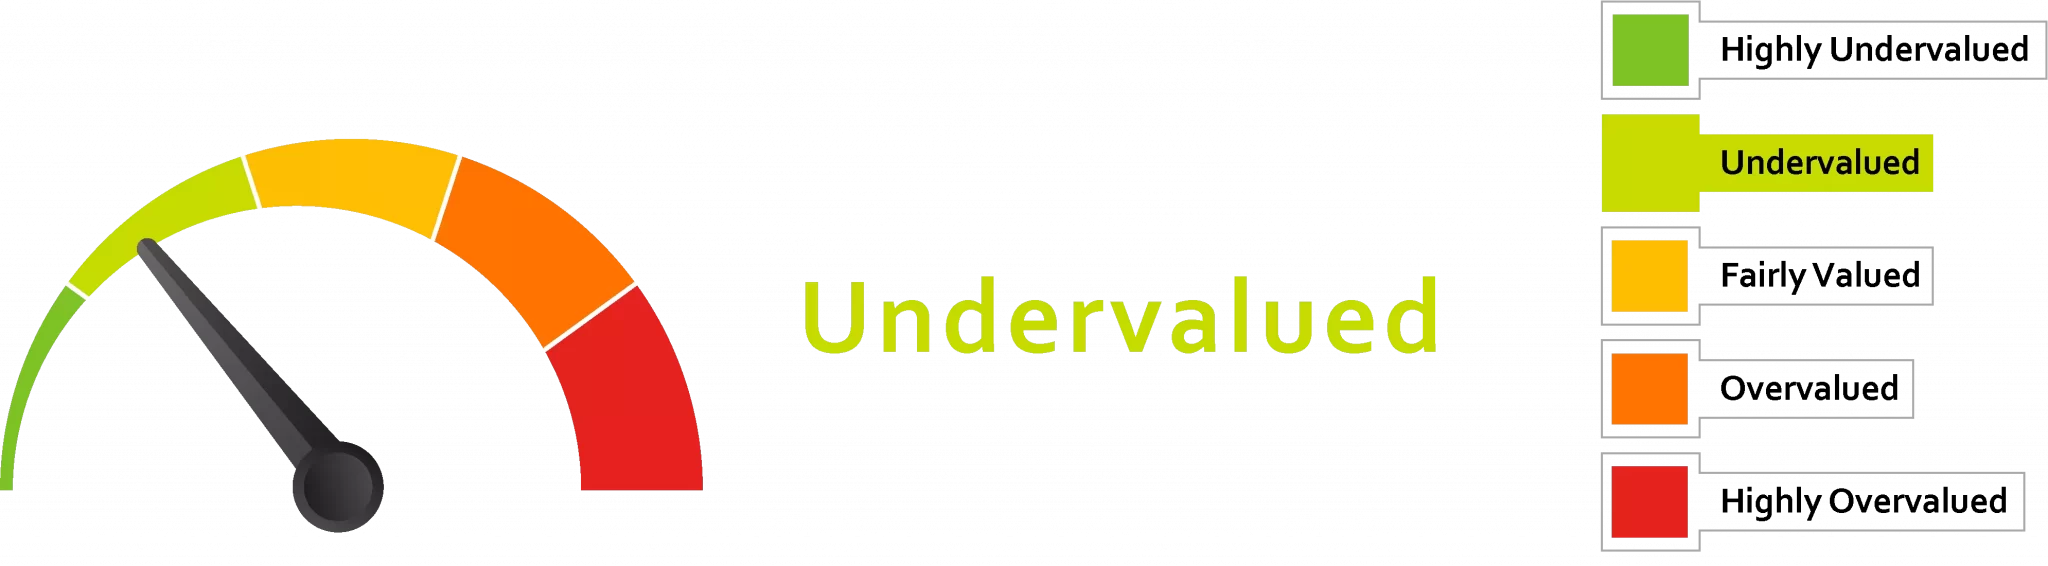 Under Valued